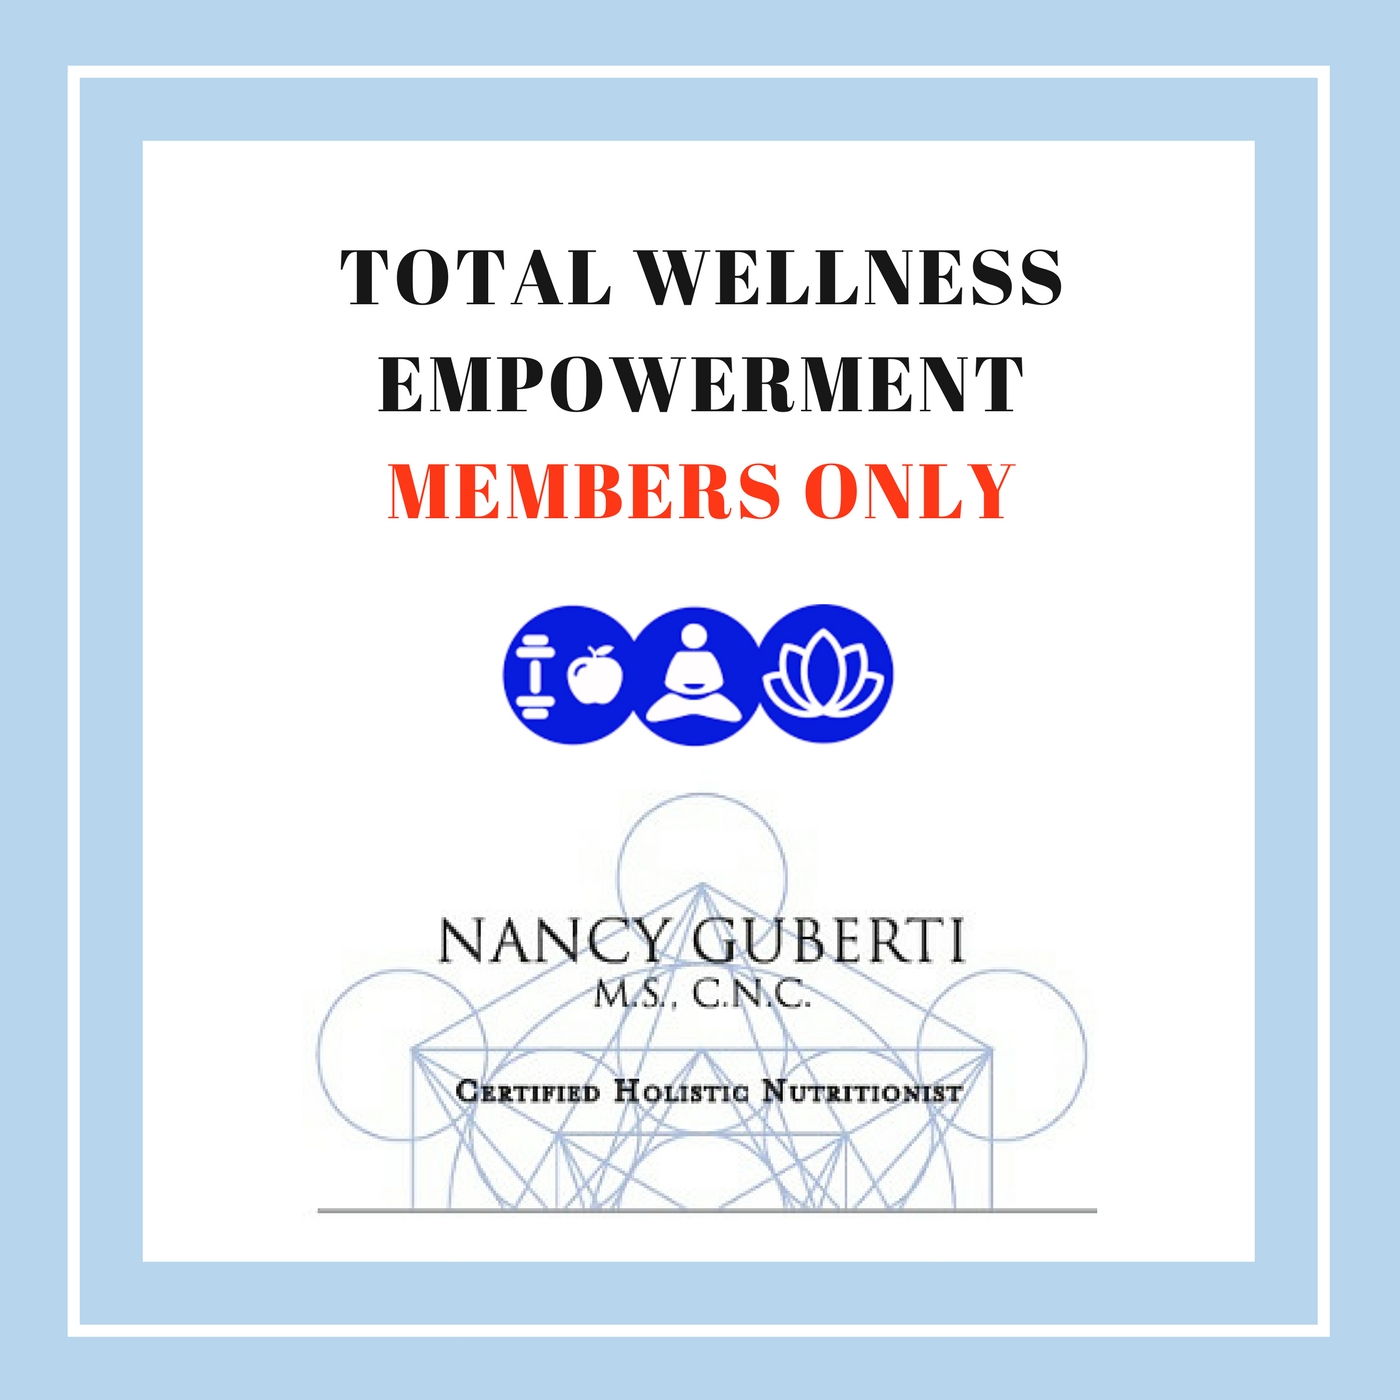 Total Wellness Empowerment by Nancy Guberti, M.S., C.N.